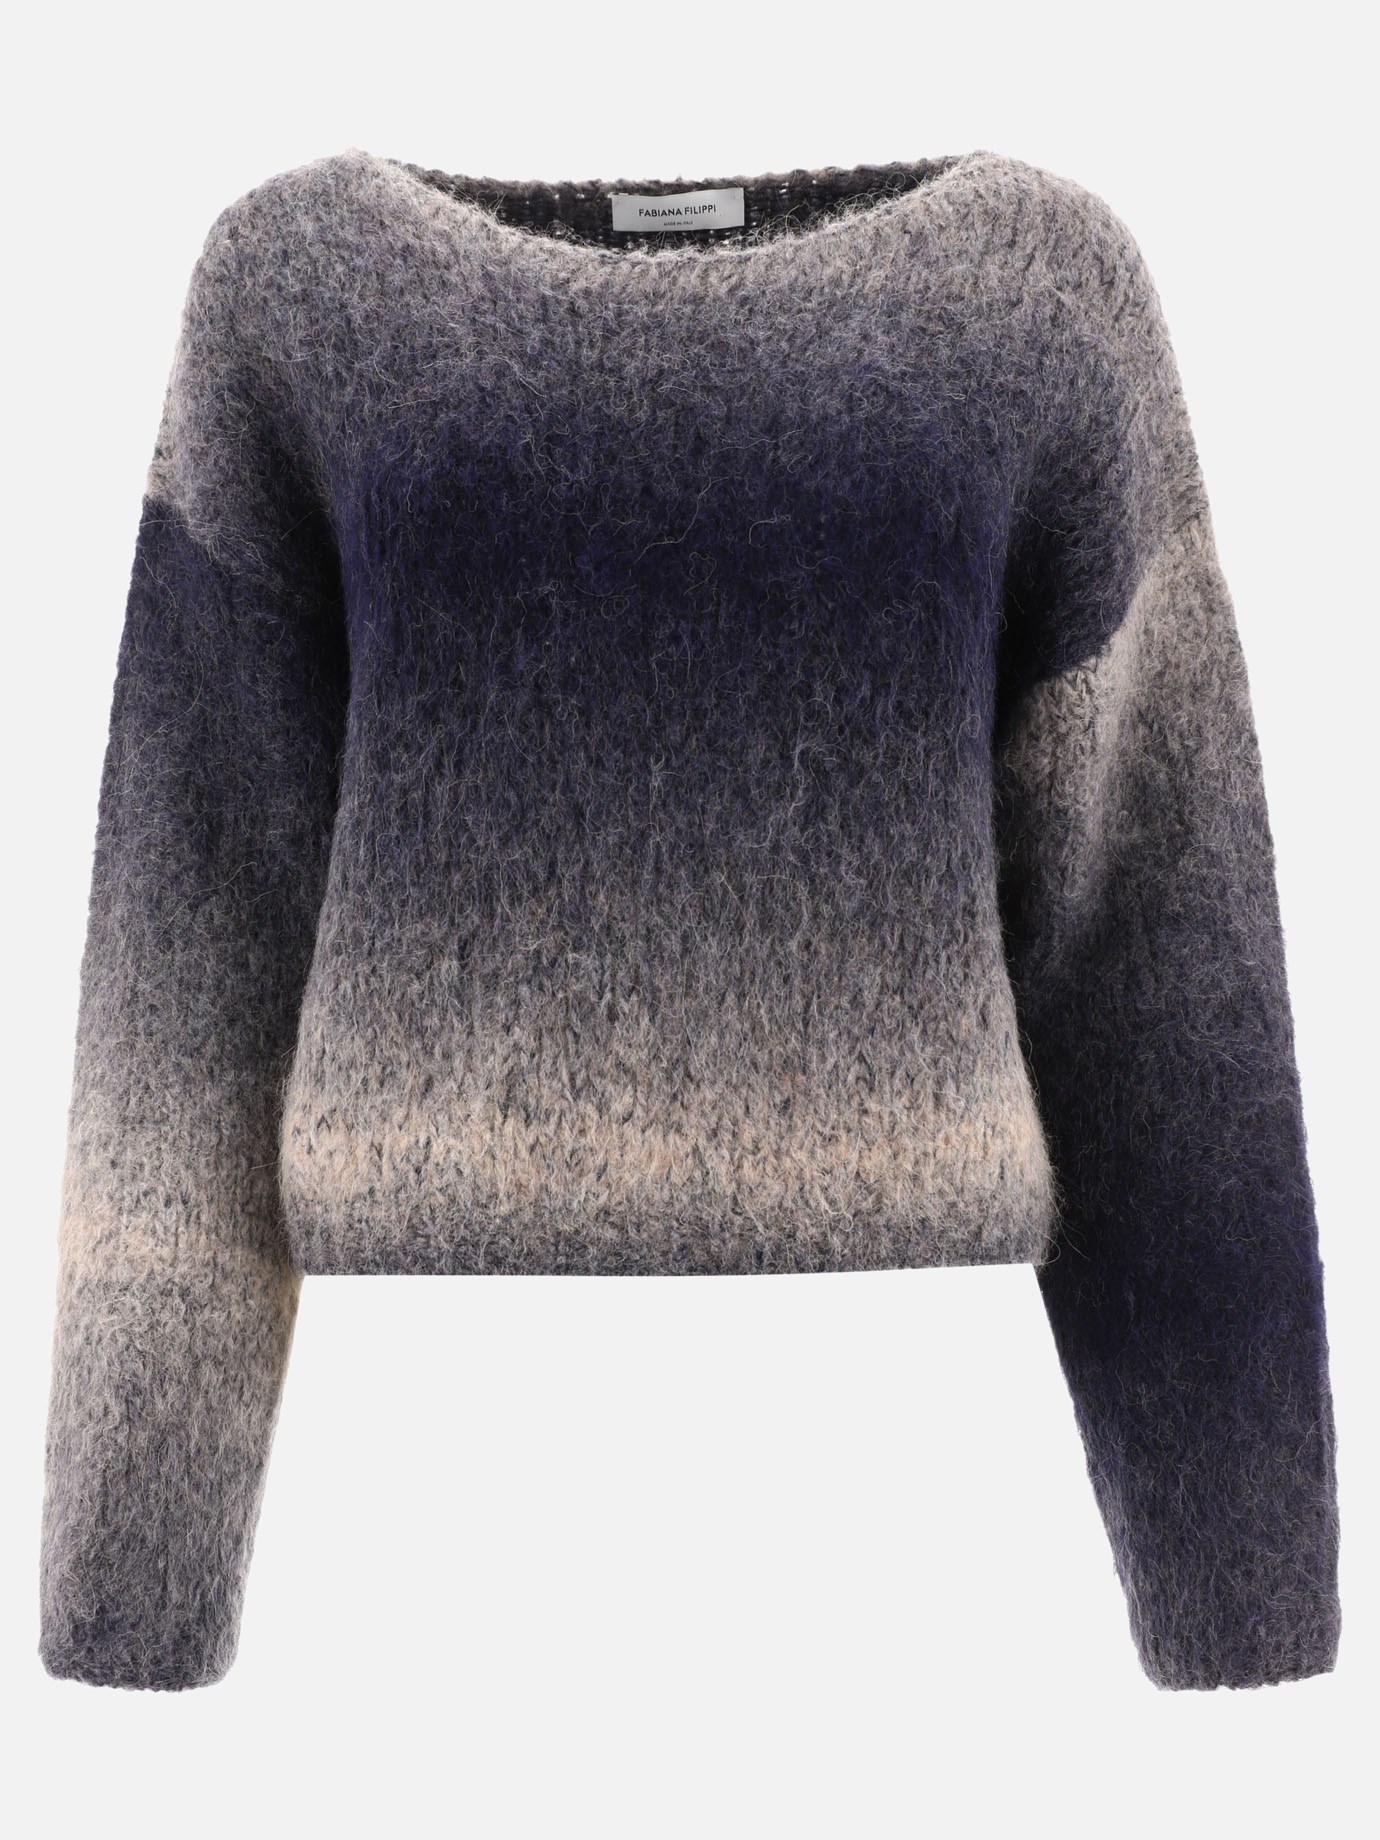 Gradient sweater